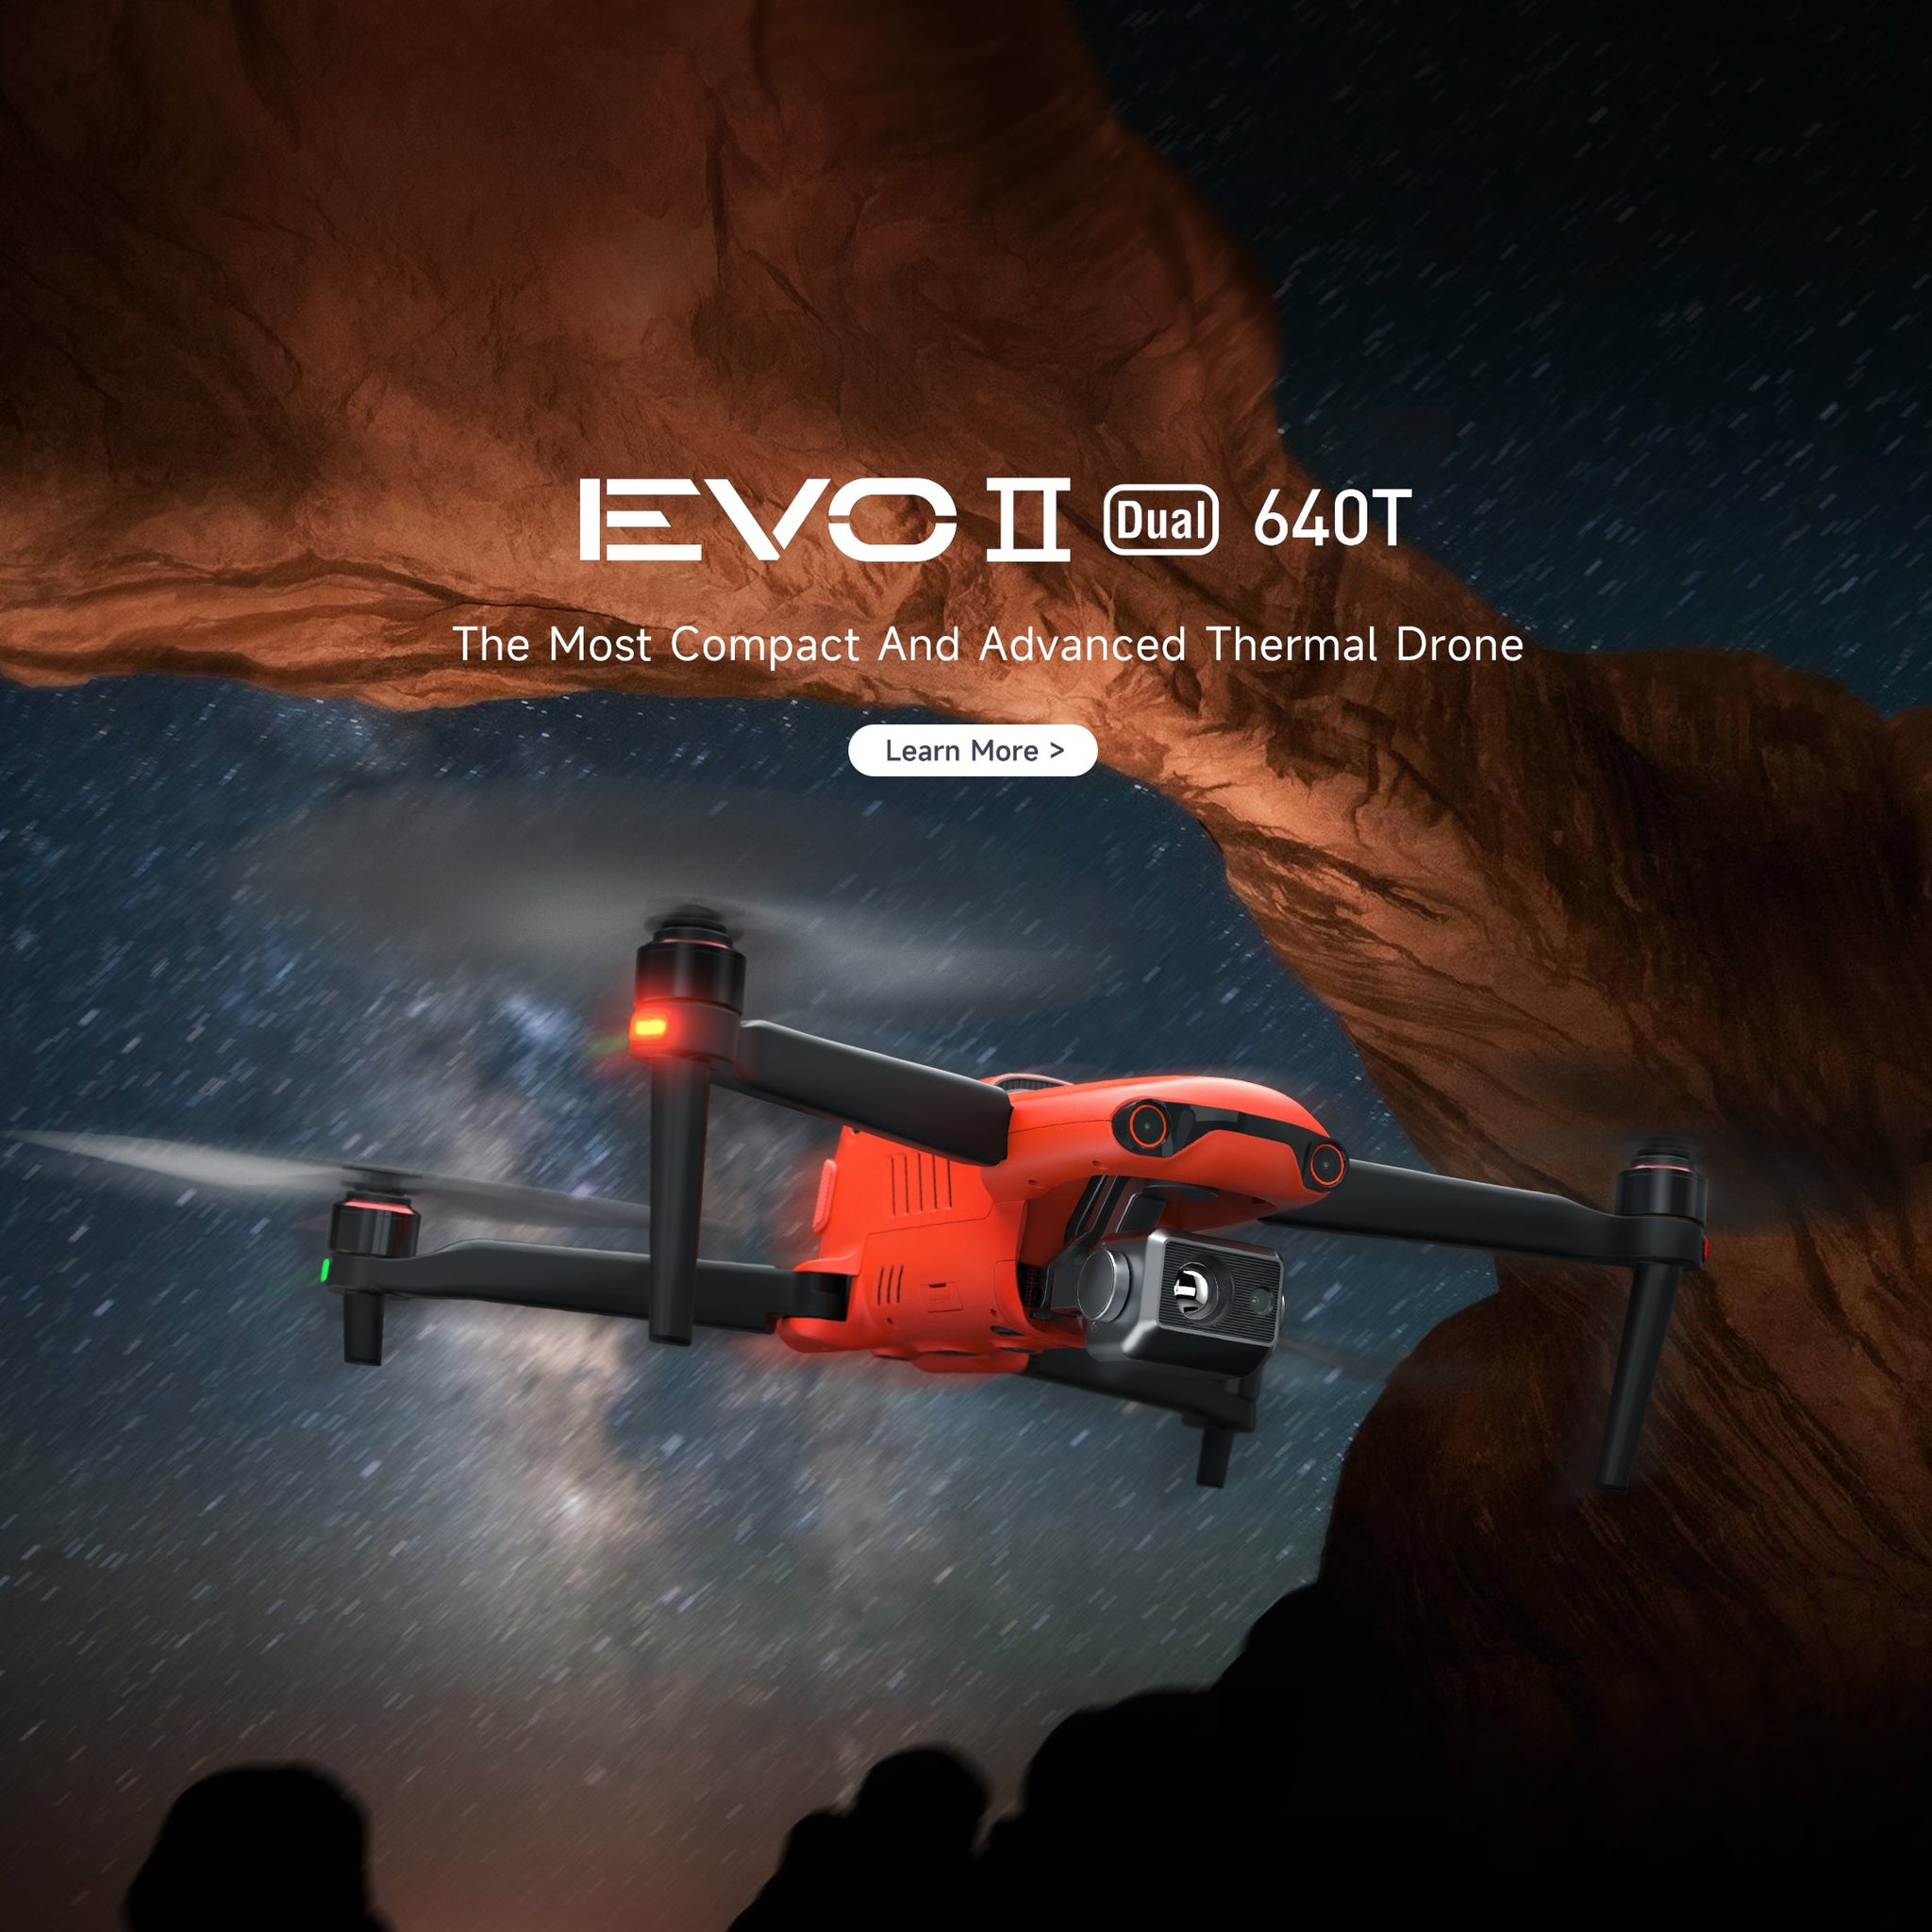 Autel EVO II Dual 640t drones